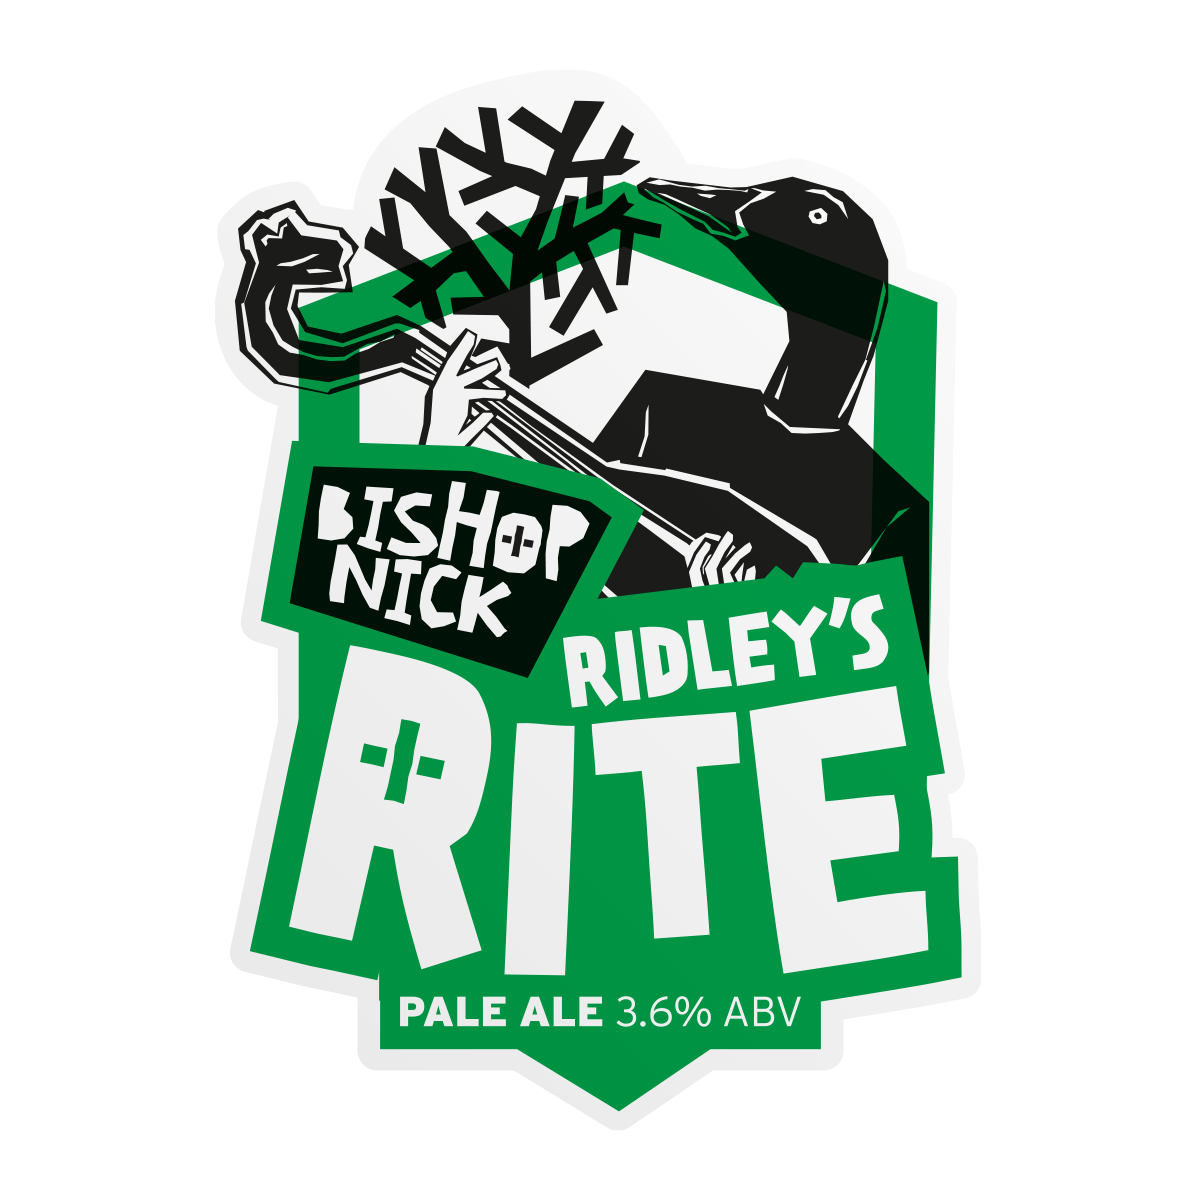 Ridley’s Rite